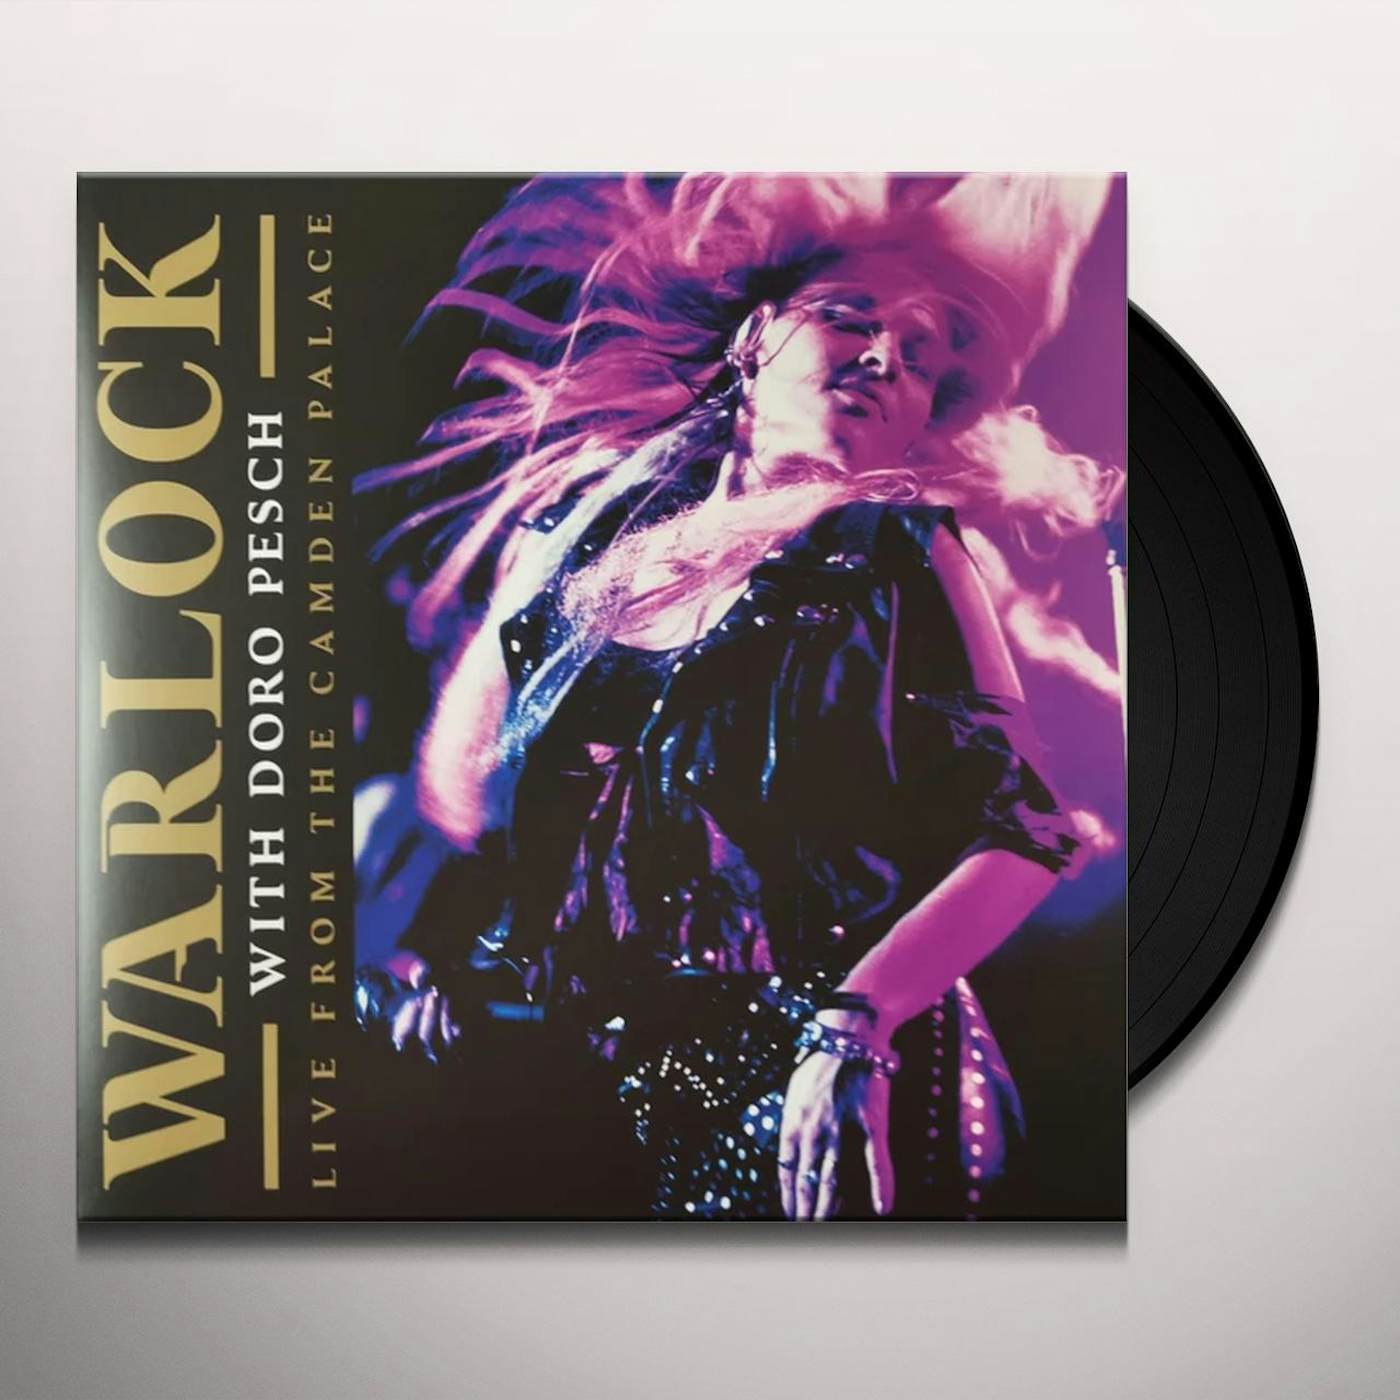 Warlock Live from camden palace   lp Vinyl Record